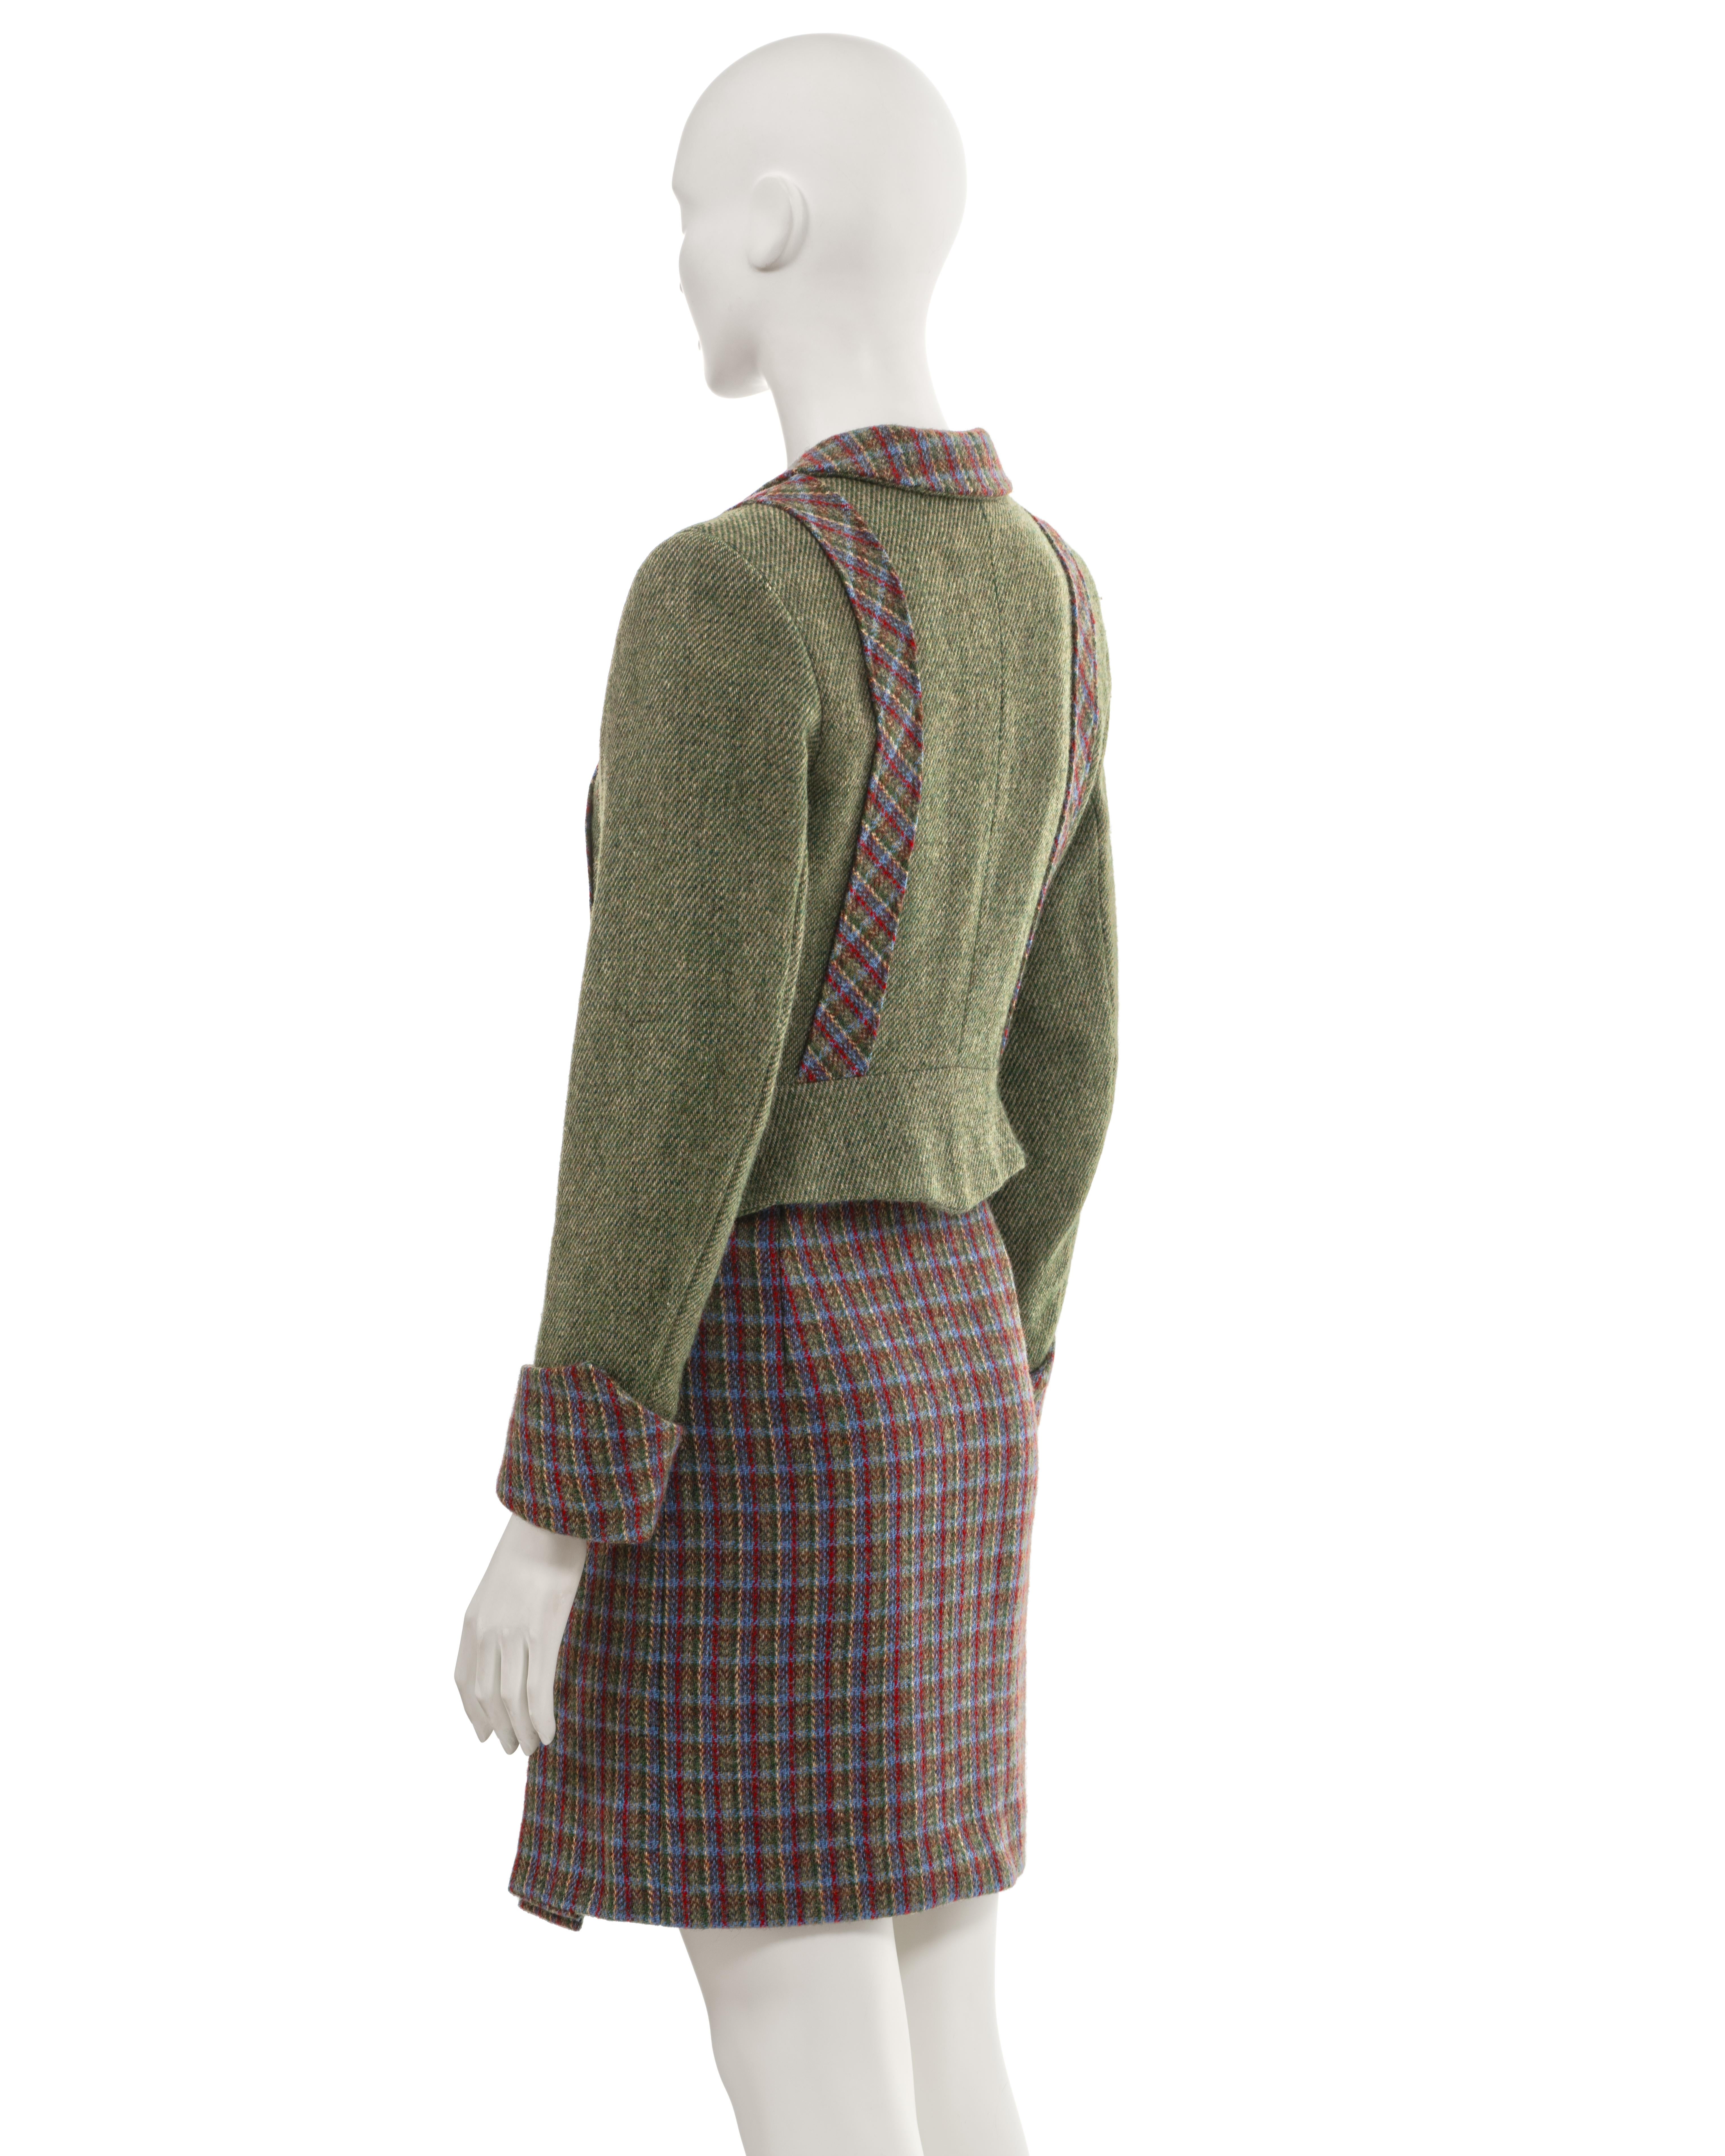 Vivienne Westwood 'Time Machine' tartan wool skirt suit, fw 1988 For Sale 9